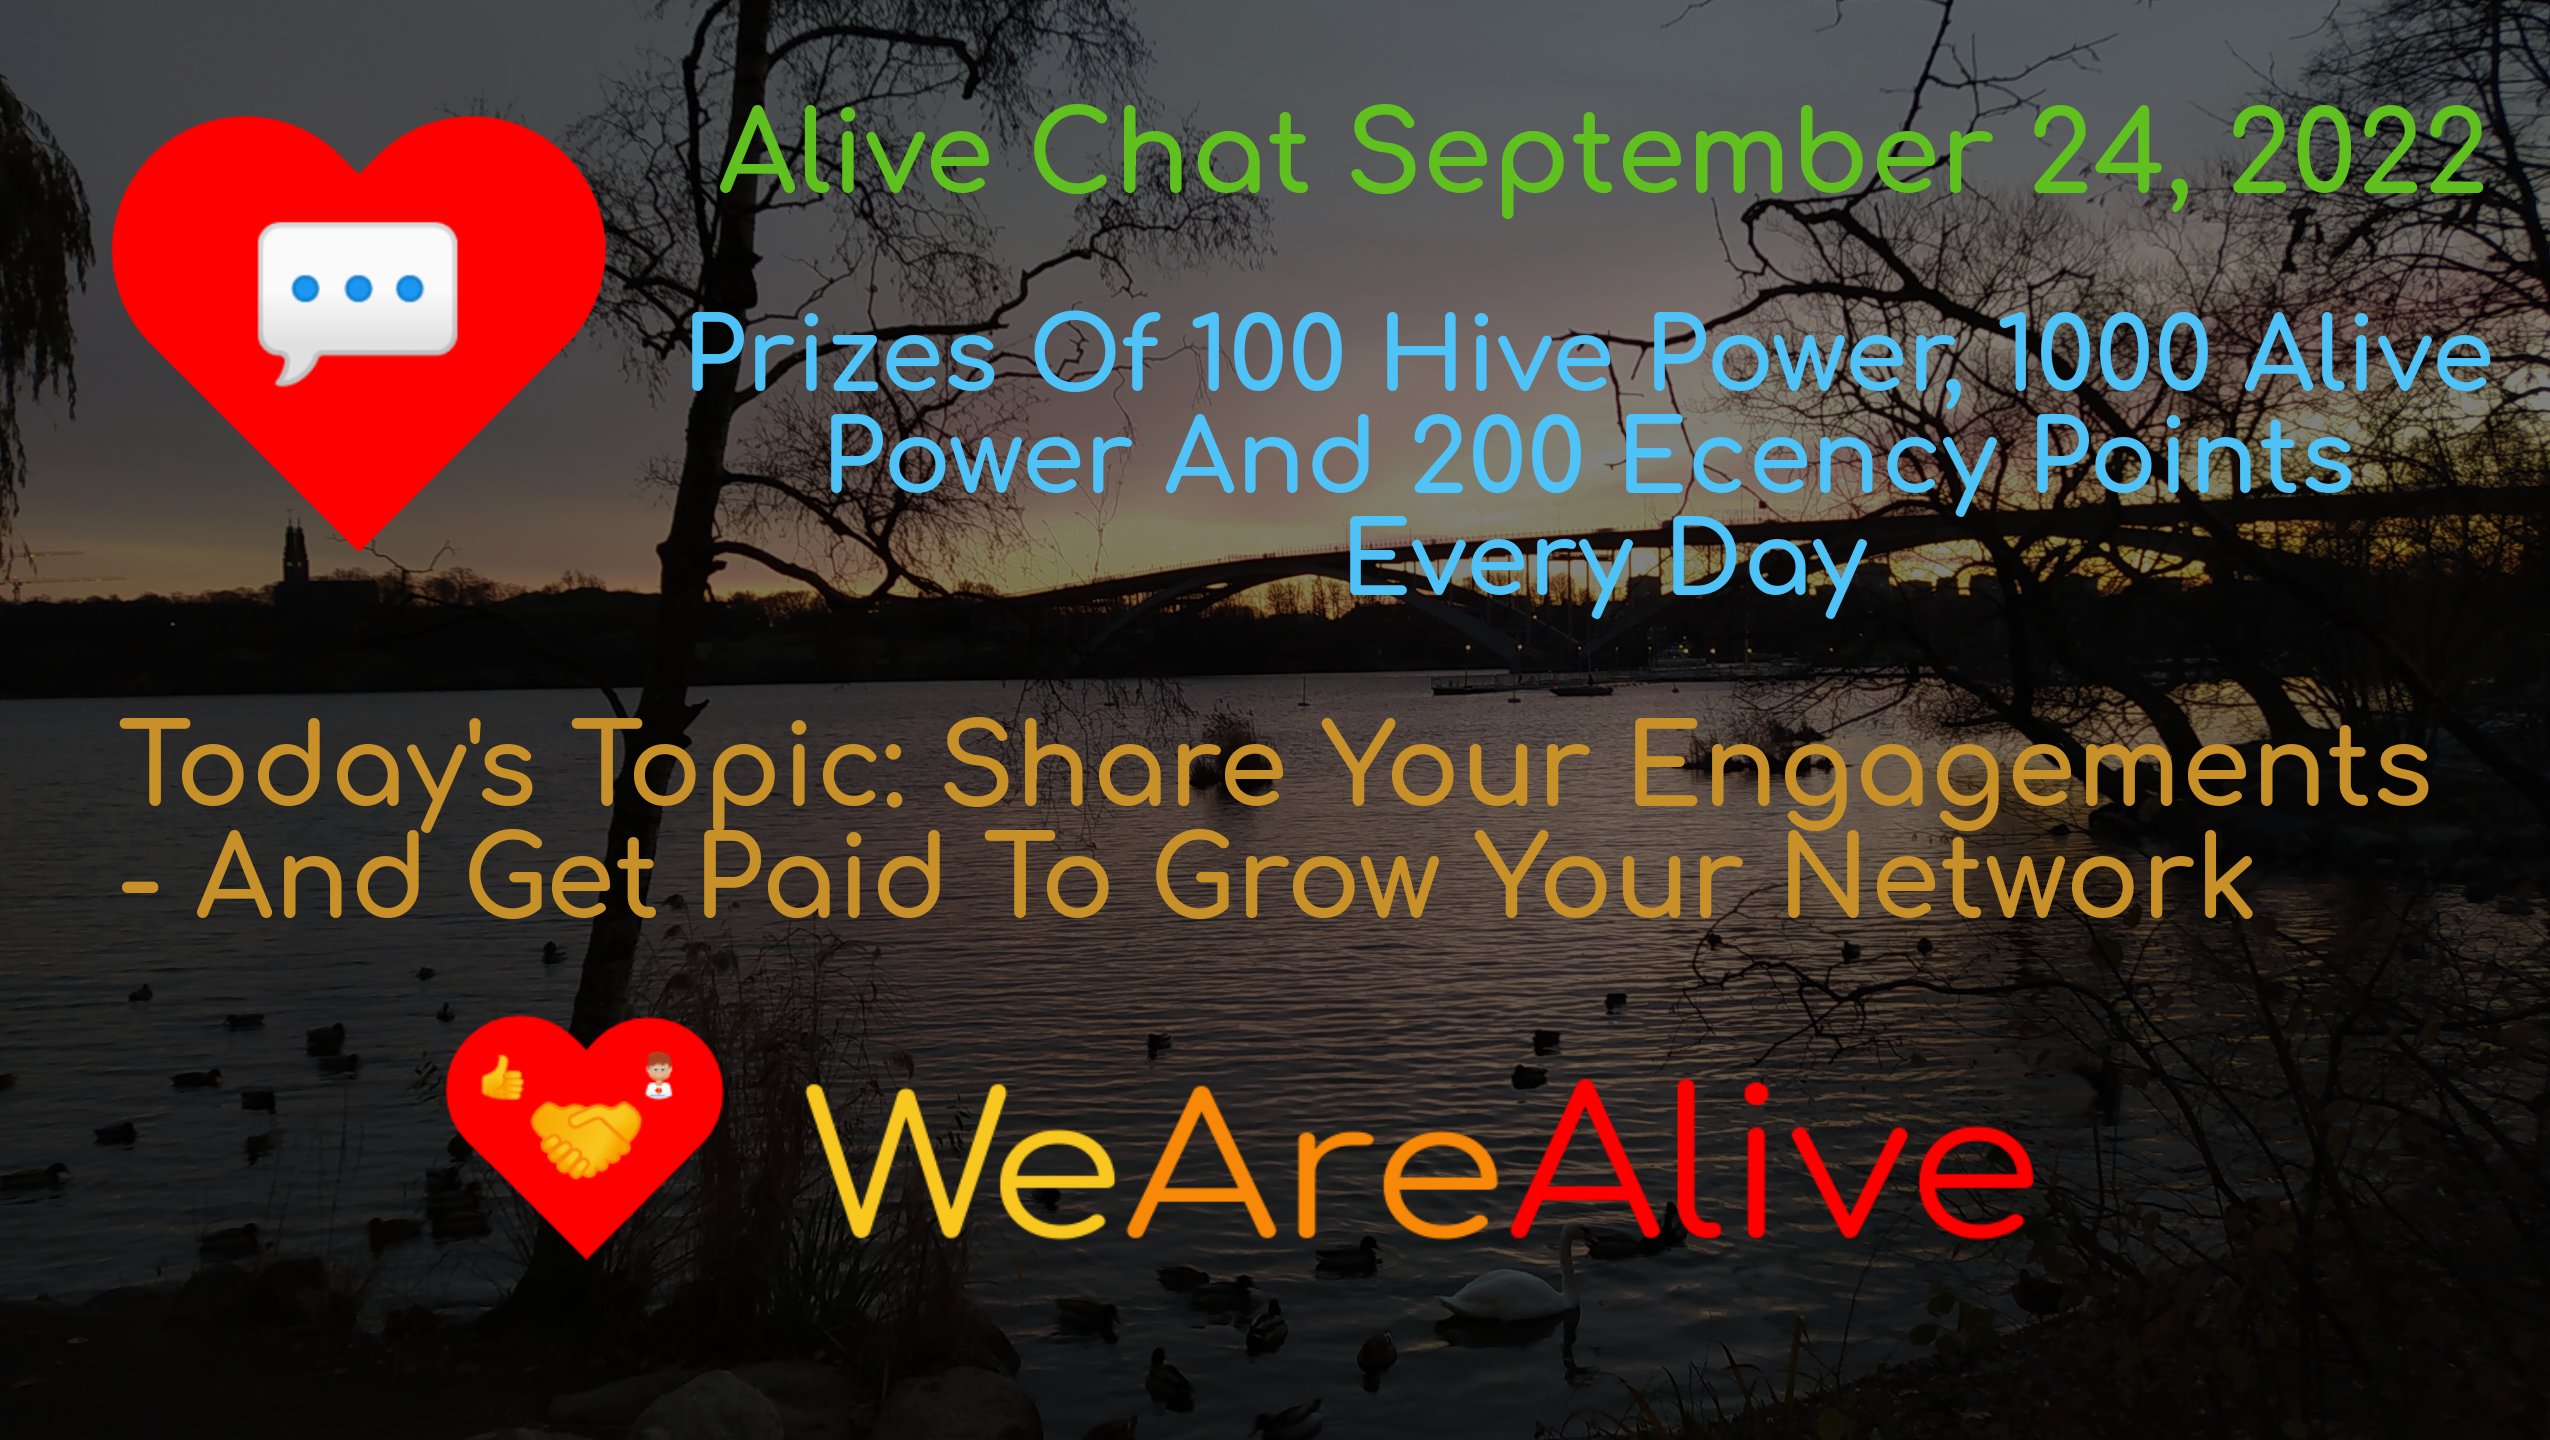 @alive.chat/alive-chat-september-24-2022